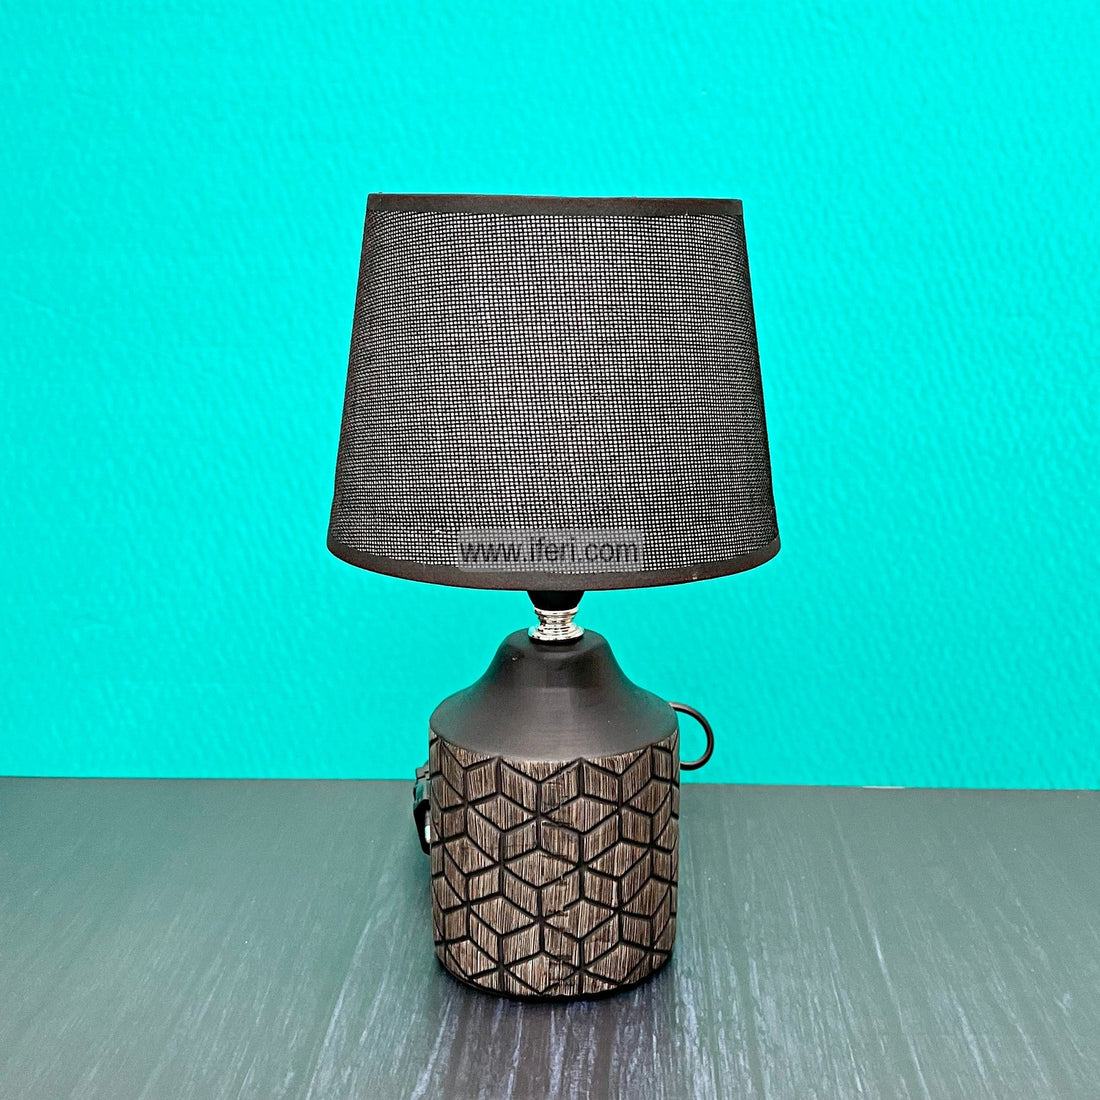 12 Inch Ceramic Table Lamp Price in Bangladesh | Buy 12 Inch Ceramic Table Lamp Online